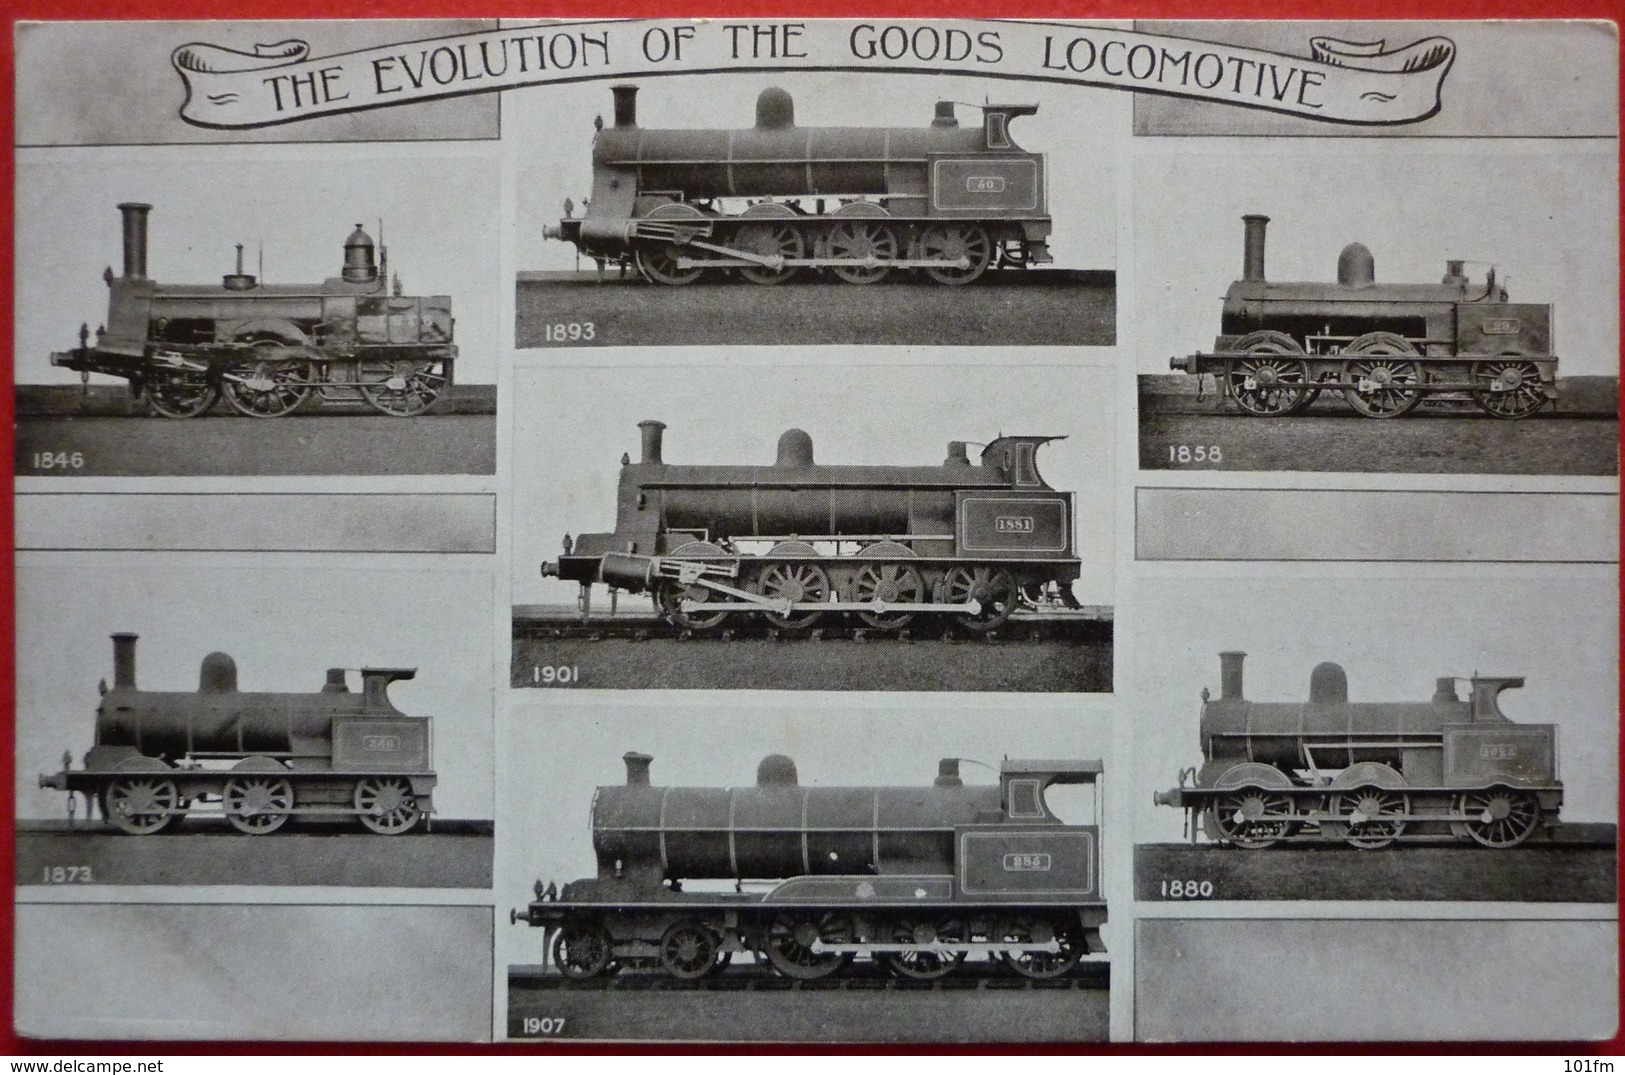 THE EVOLUTION OF THE GOODS LOCOMOTIVE - STEAM LOCOMOTIVE - Trains